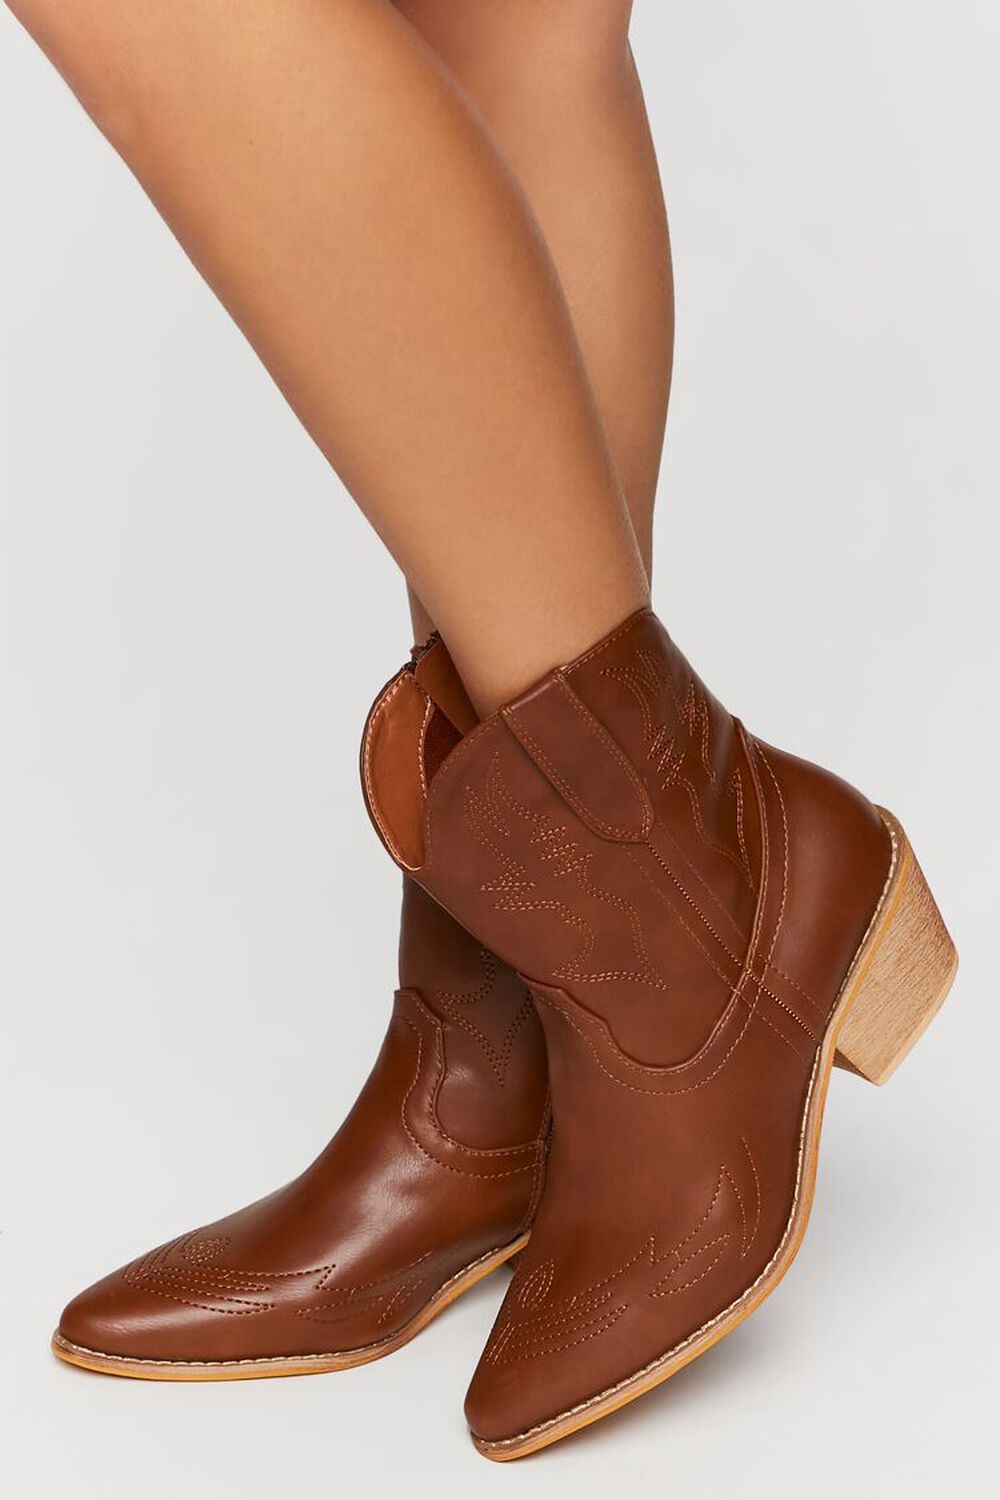 TAN Faux Leather Cowboy Ankle Boots, image 1